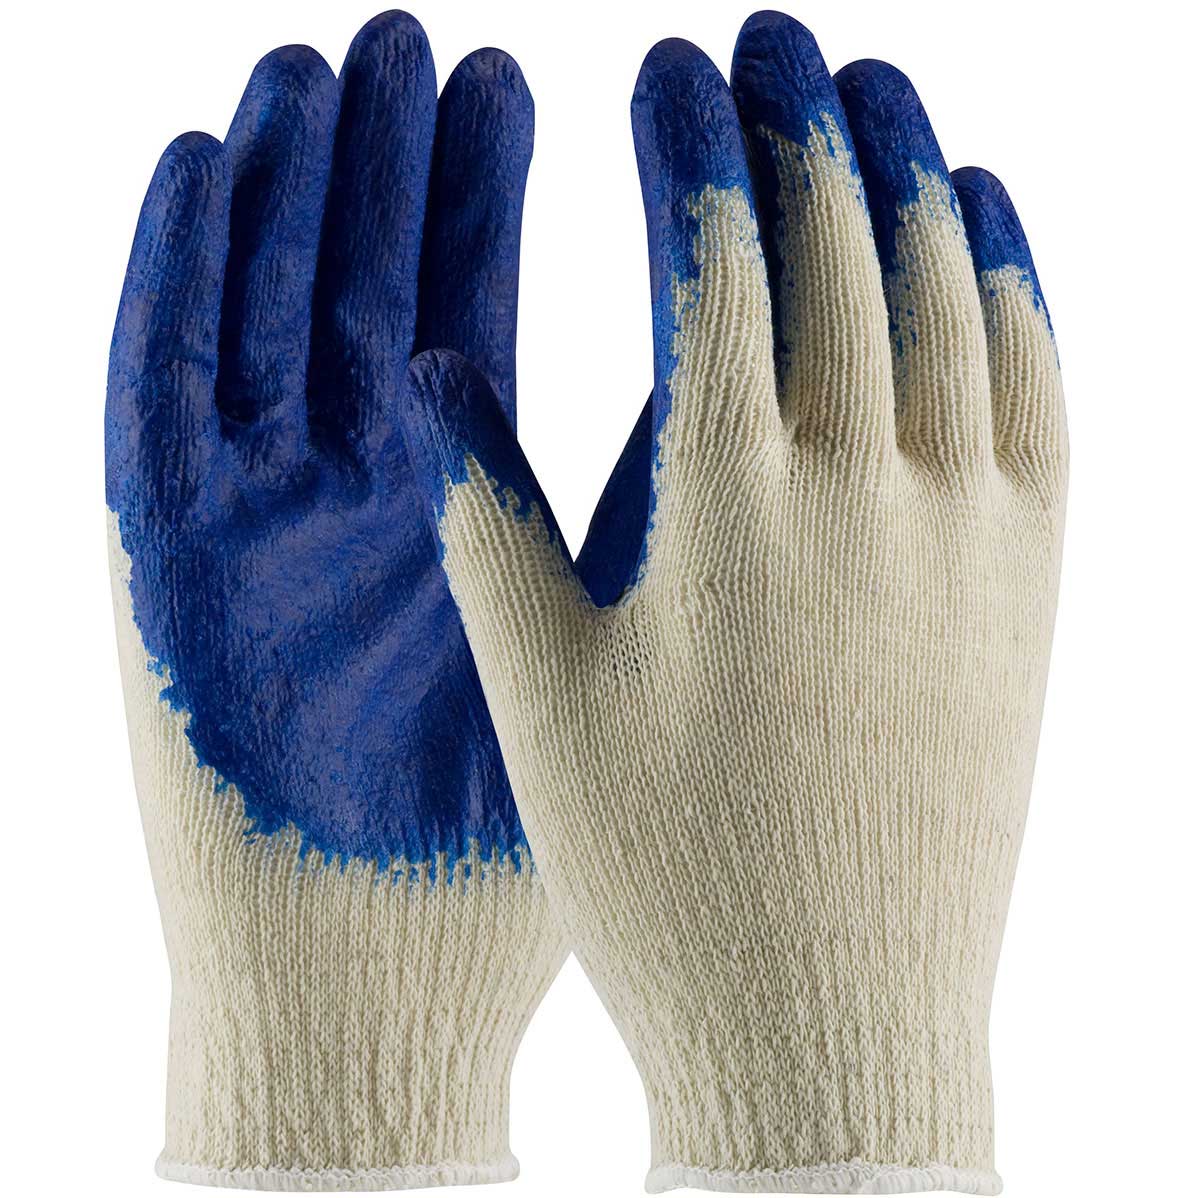 PIP Seamless Knit Cotton / Polyester Glove